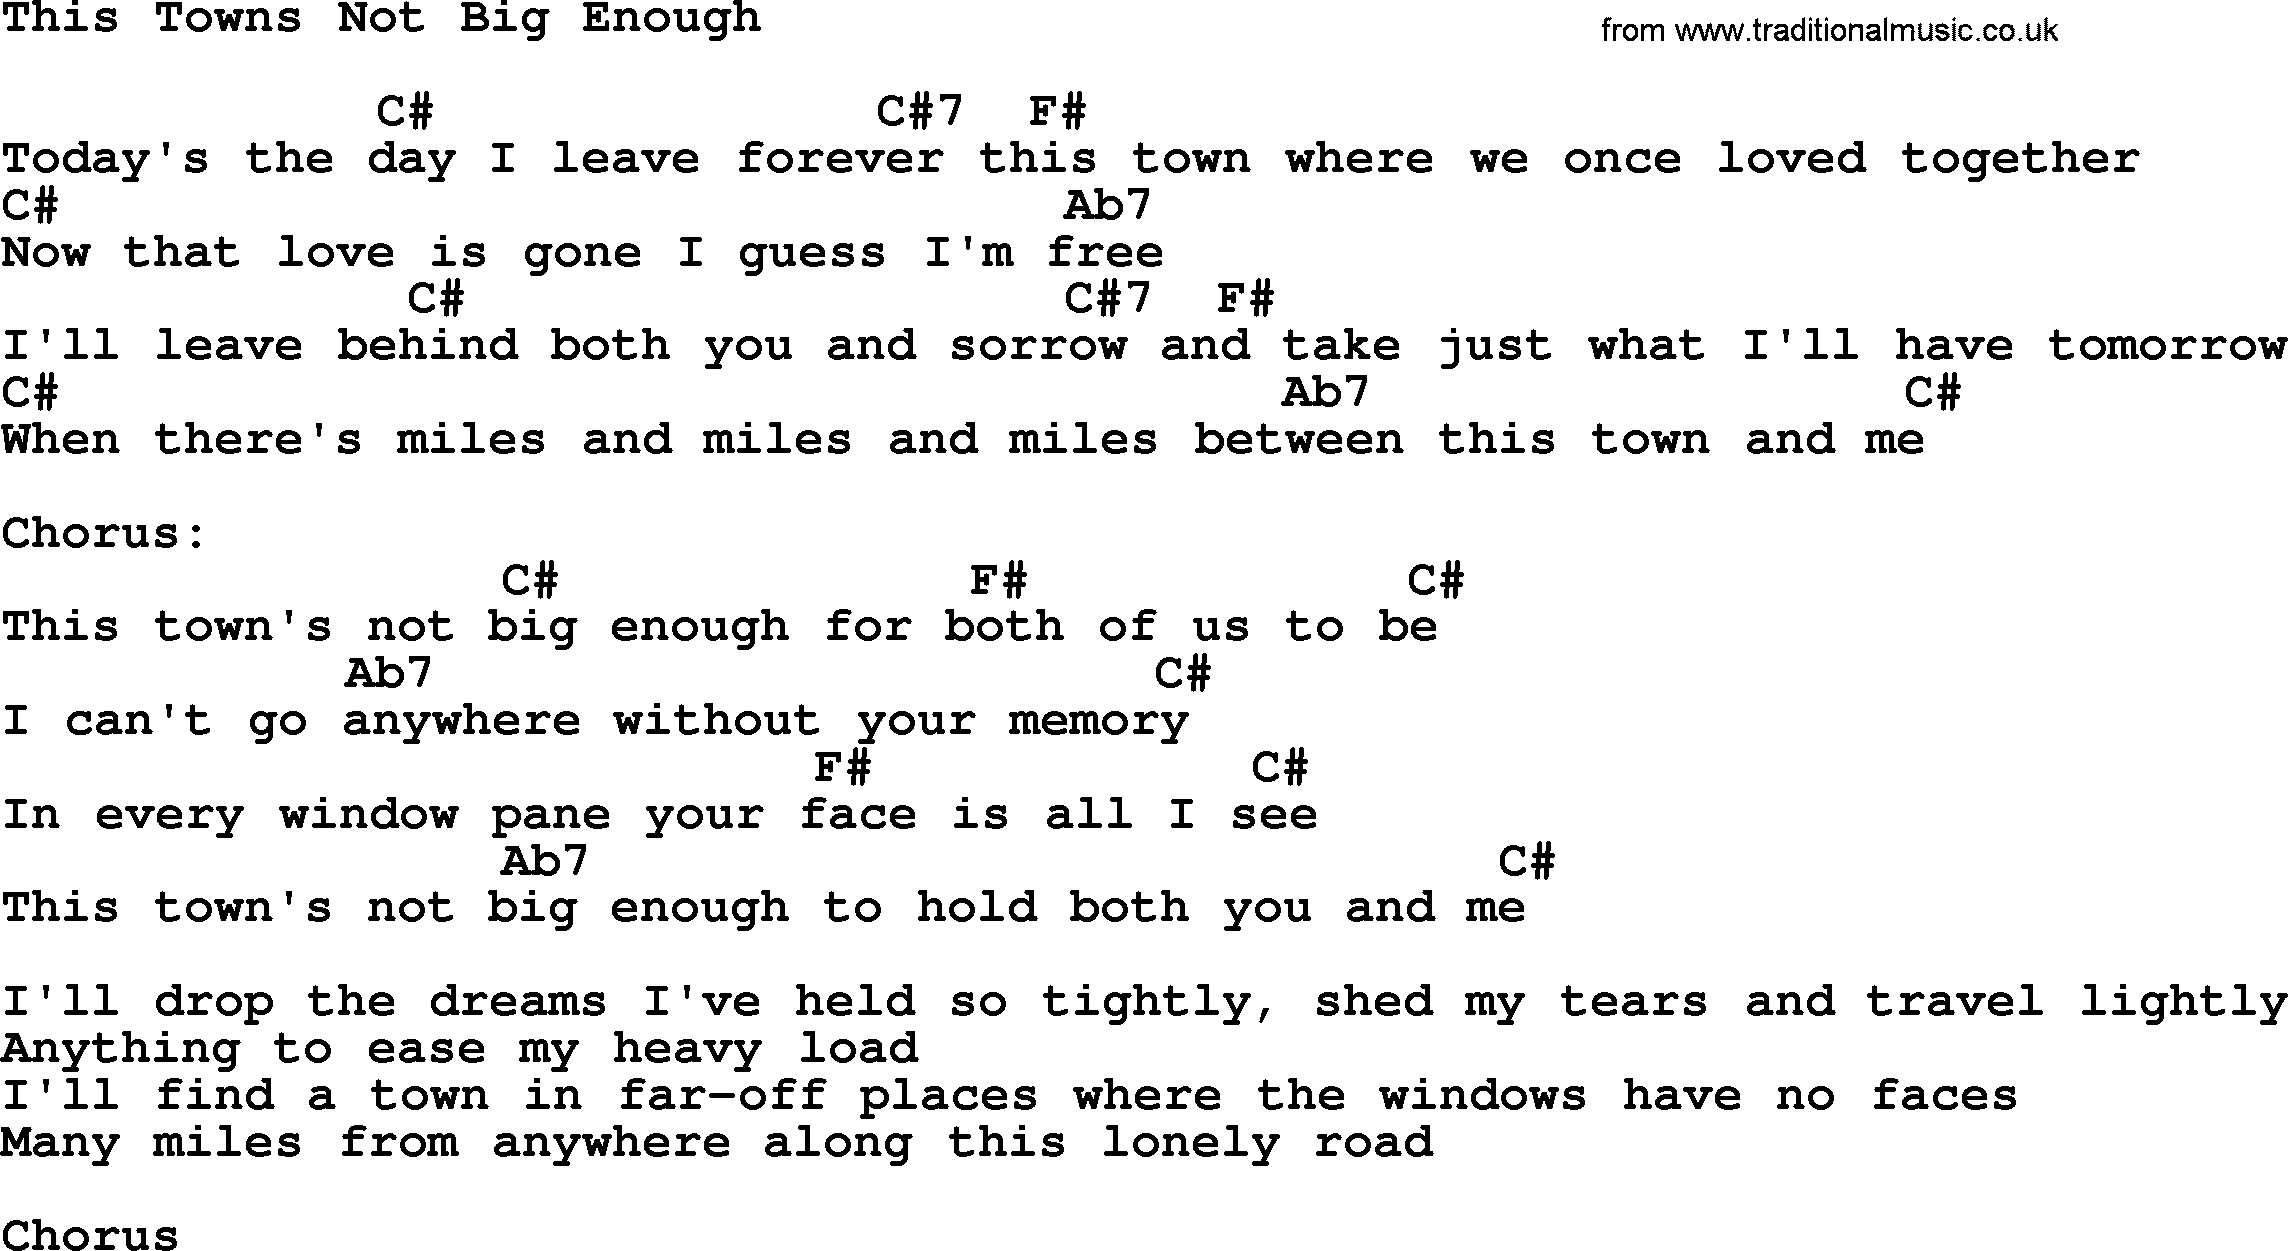 Merle Haggard song: This Towns Not Big Enough, lyrics and chords